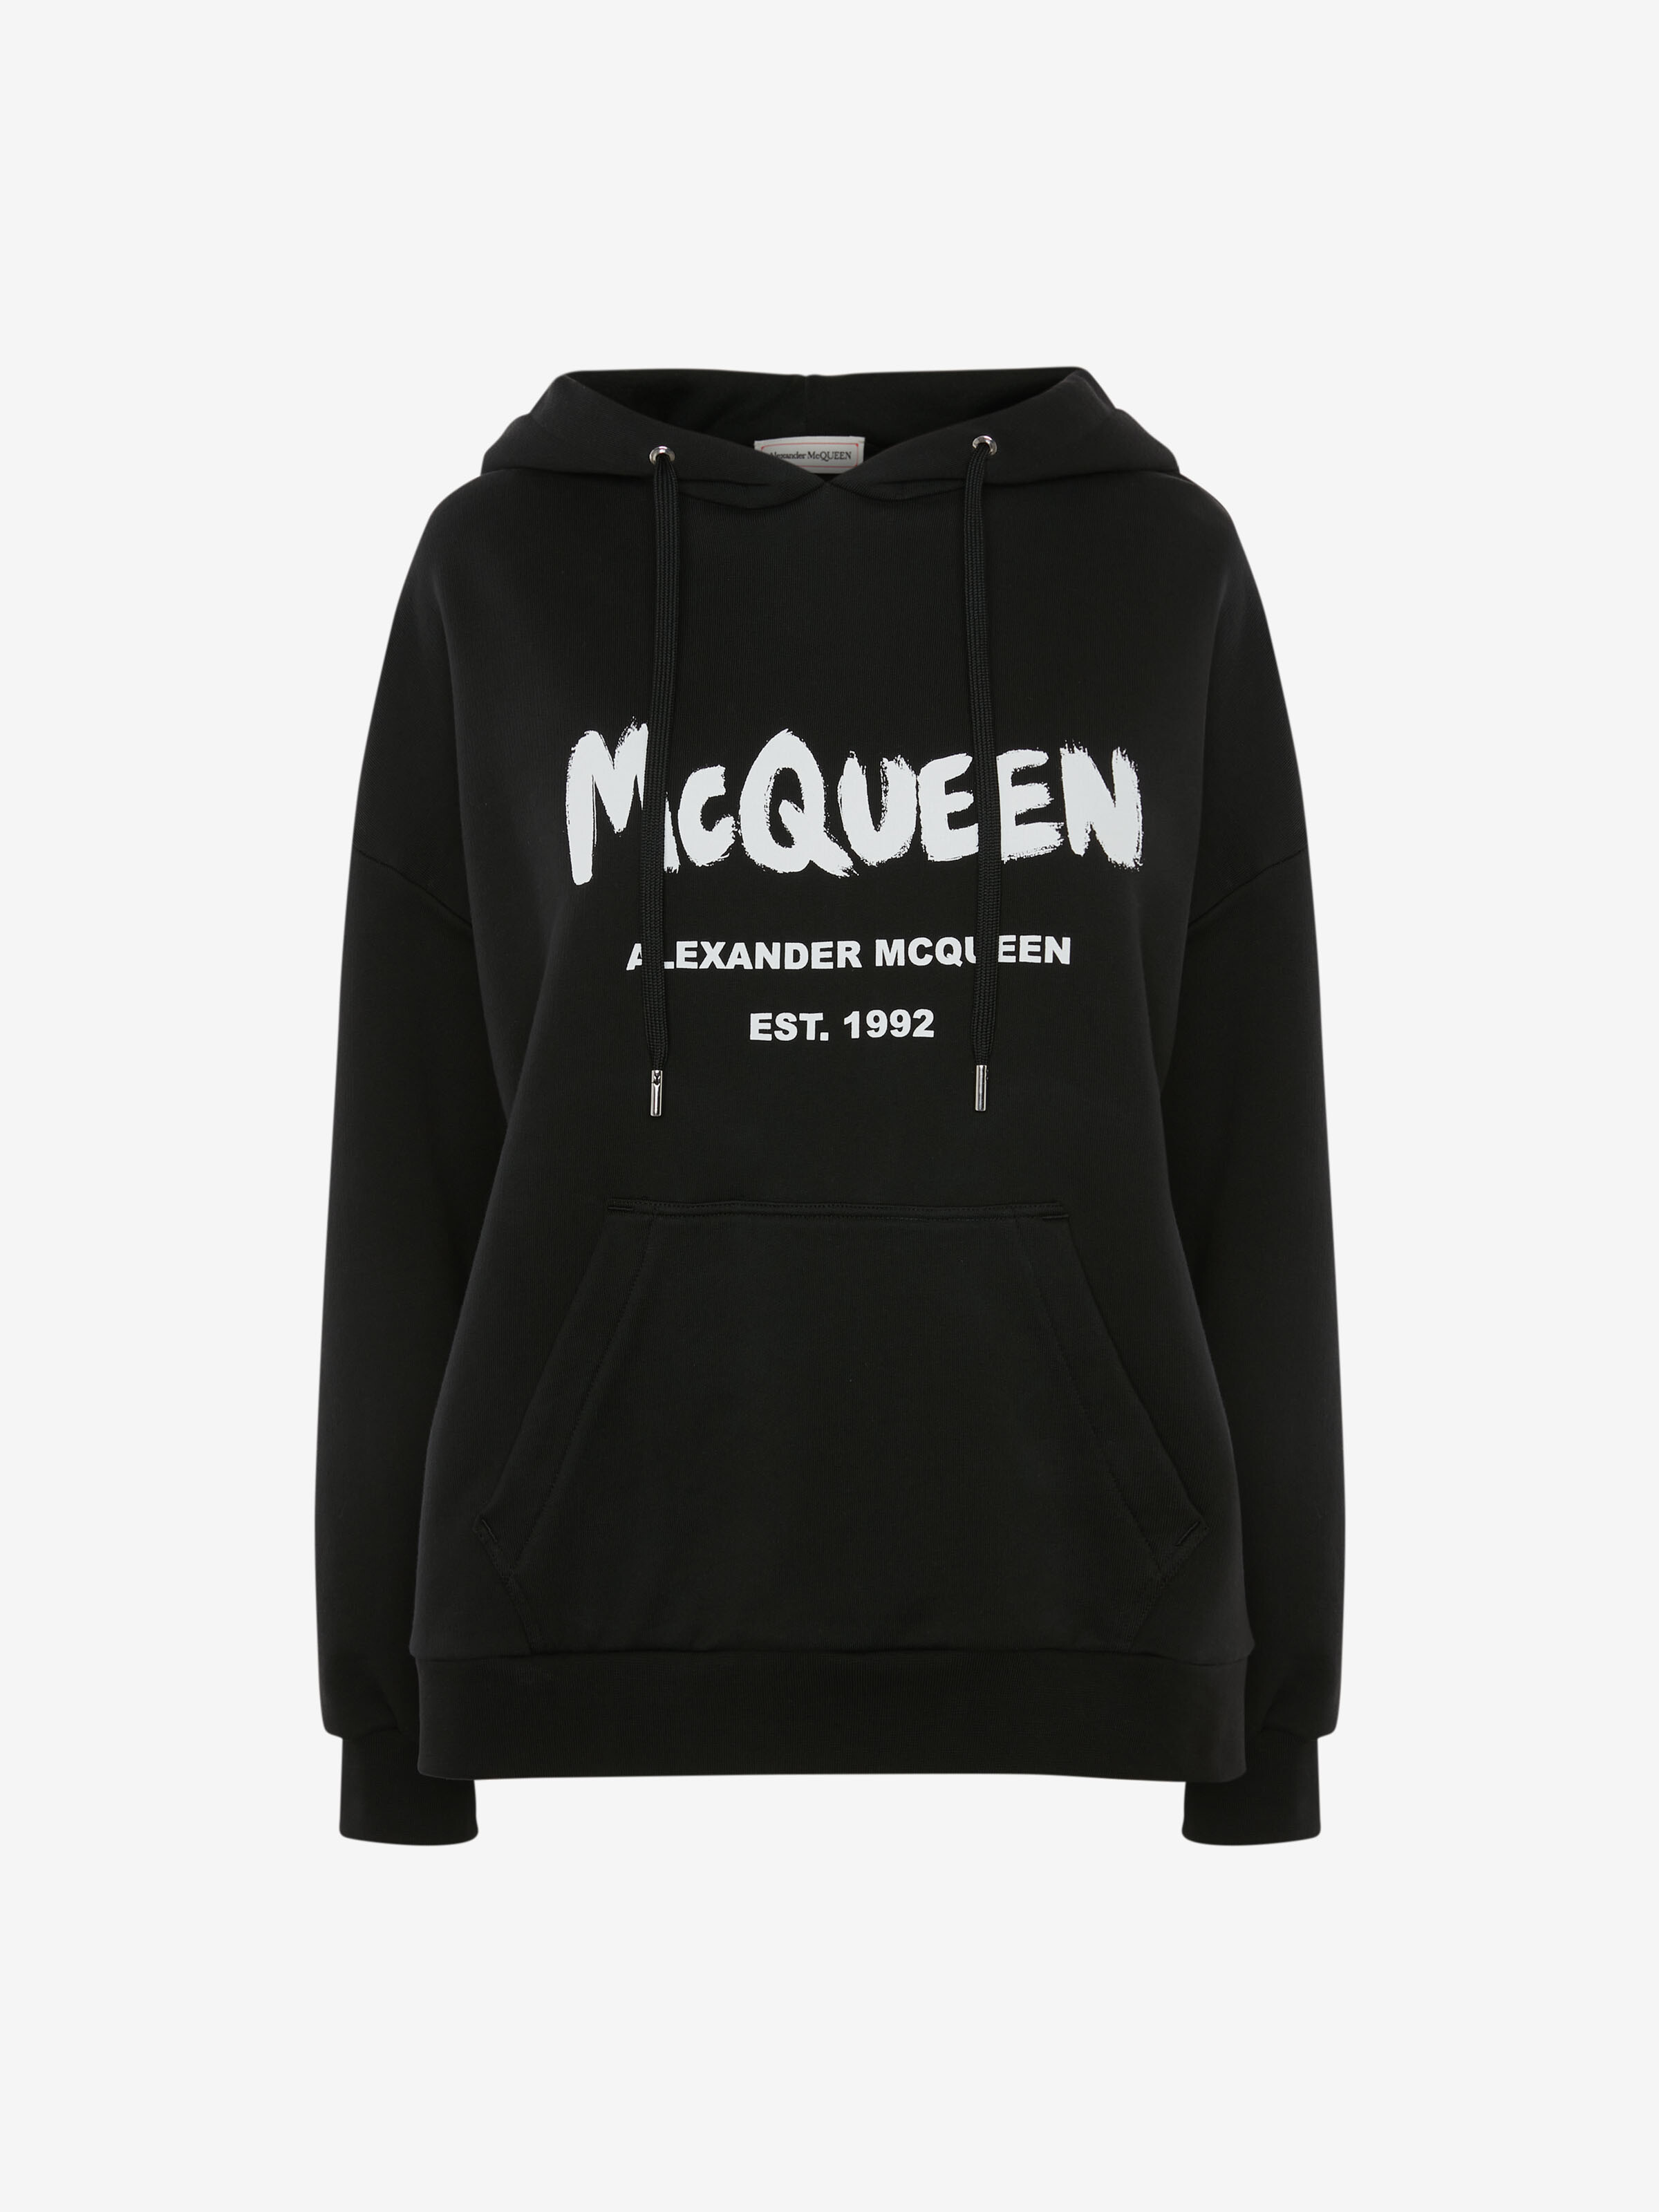 McQueen Graffiti Hooded Sweatshirt